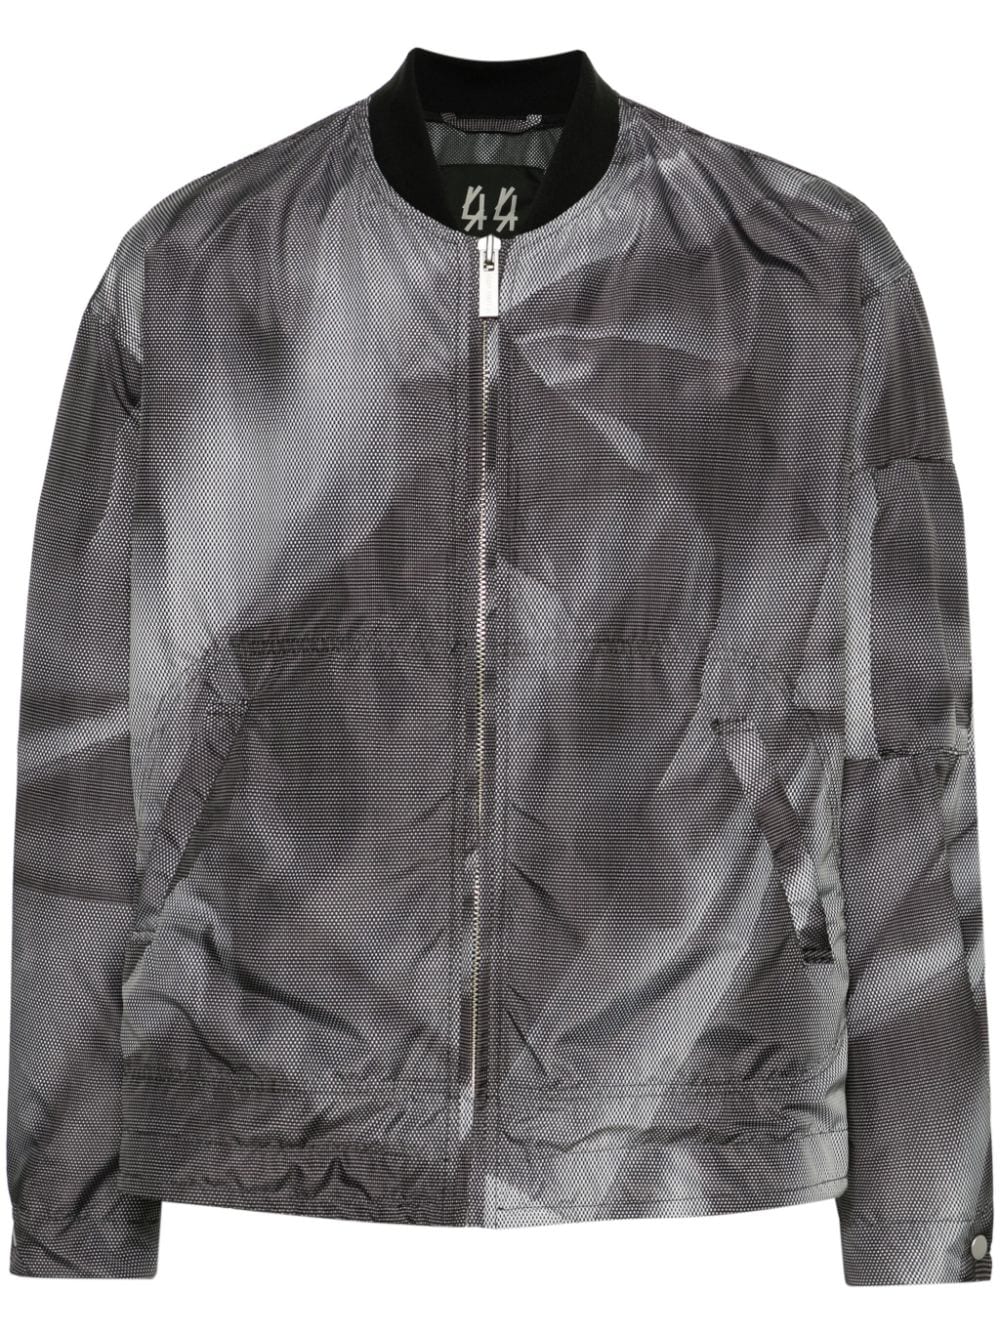 Shop 44 Label Group Crinkle Graphic-print Bomber Jacket In Black